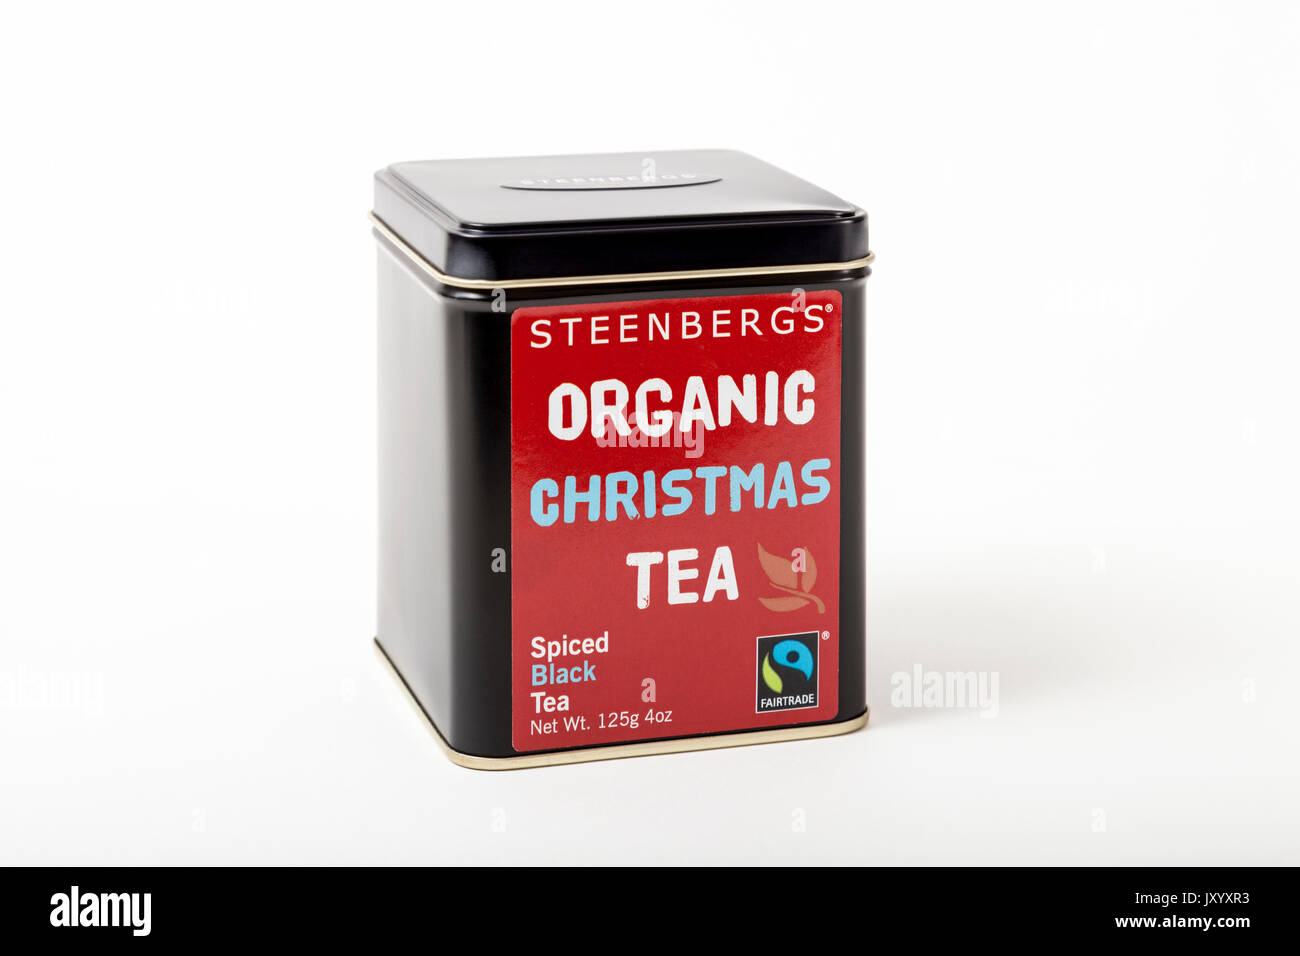 Fairtrade tea. A tea caddy of Steenberg's Organic Christmas Tea, a fairtrade product of spiced black tea. On a white background Stock Photo